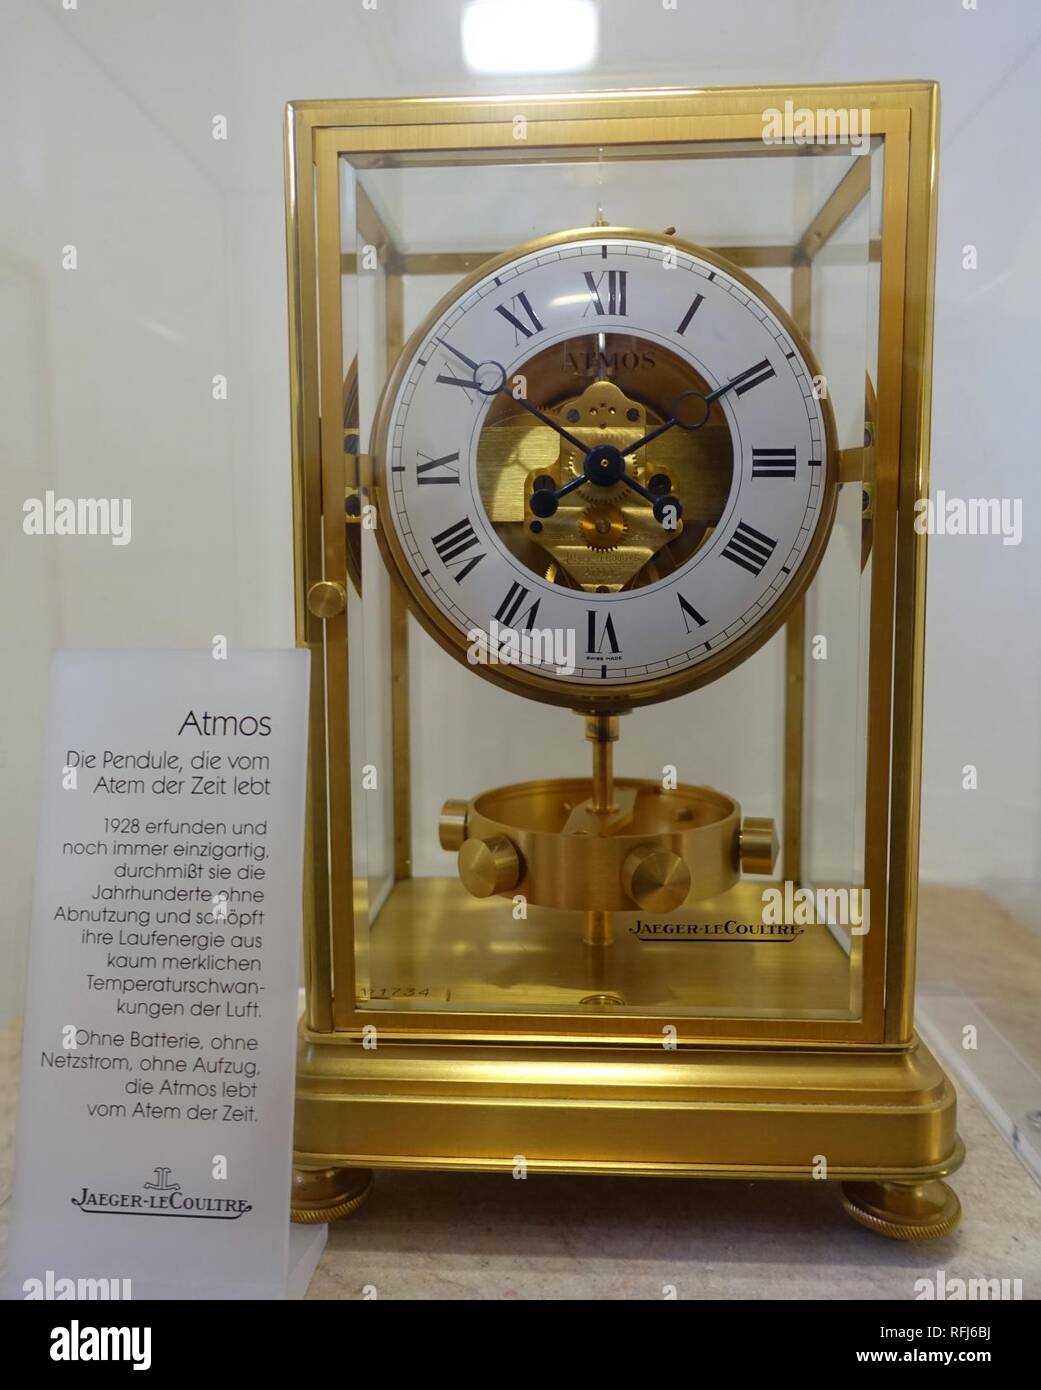 Atmos clock prototype, Jaeger-LeCoultre - Karl Gebhardt Horological Collection - Gewerbemuseum - Nuremberg, Germany - Stock Photo